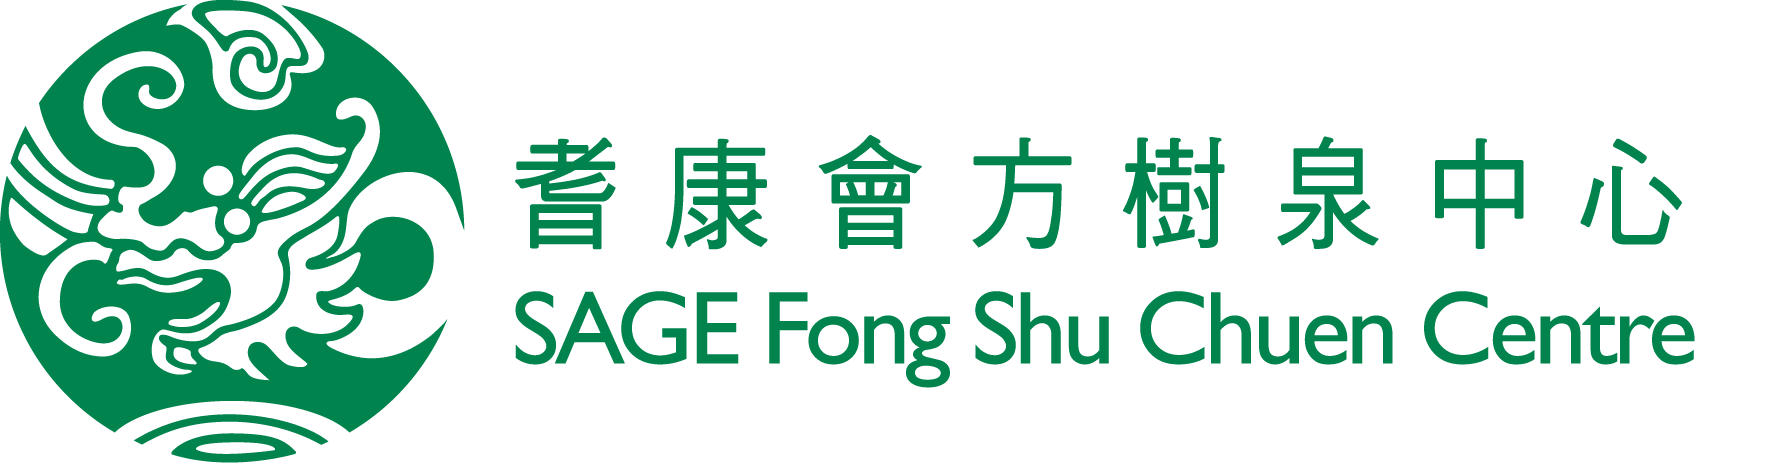 SAGE FONG SHU CHUEN CENTRE